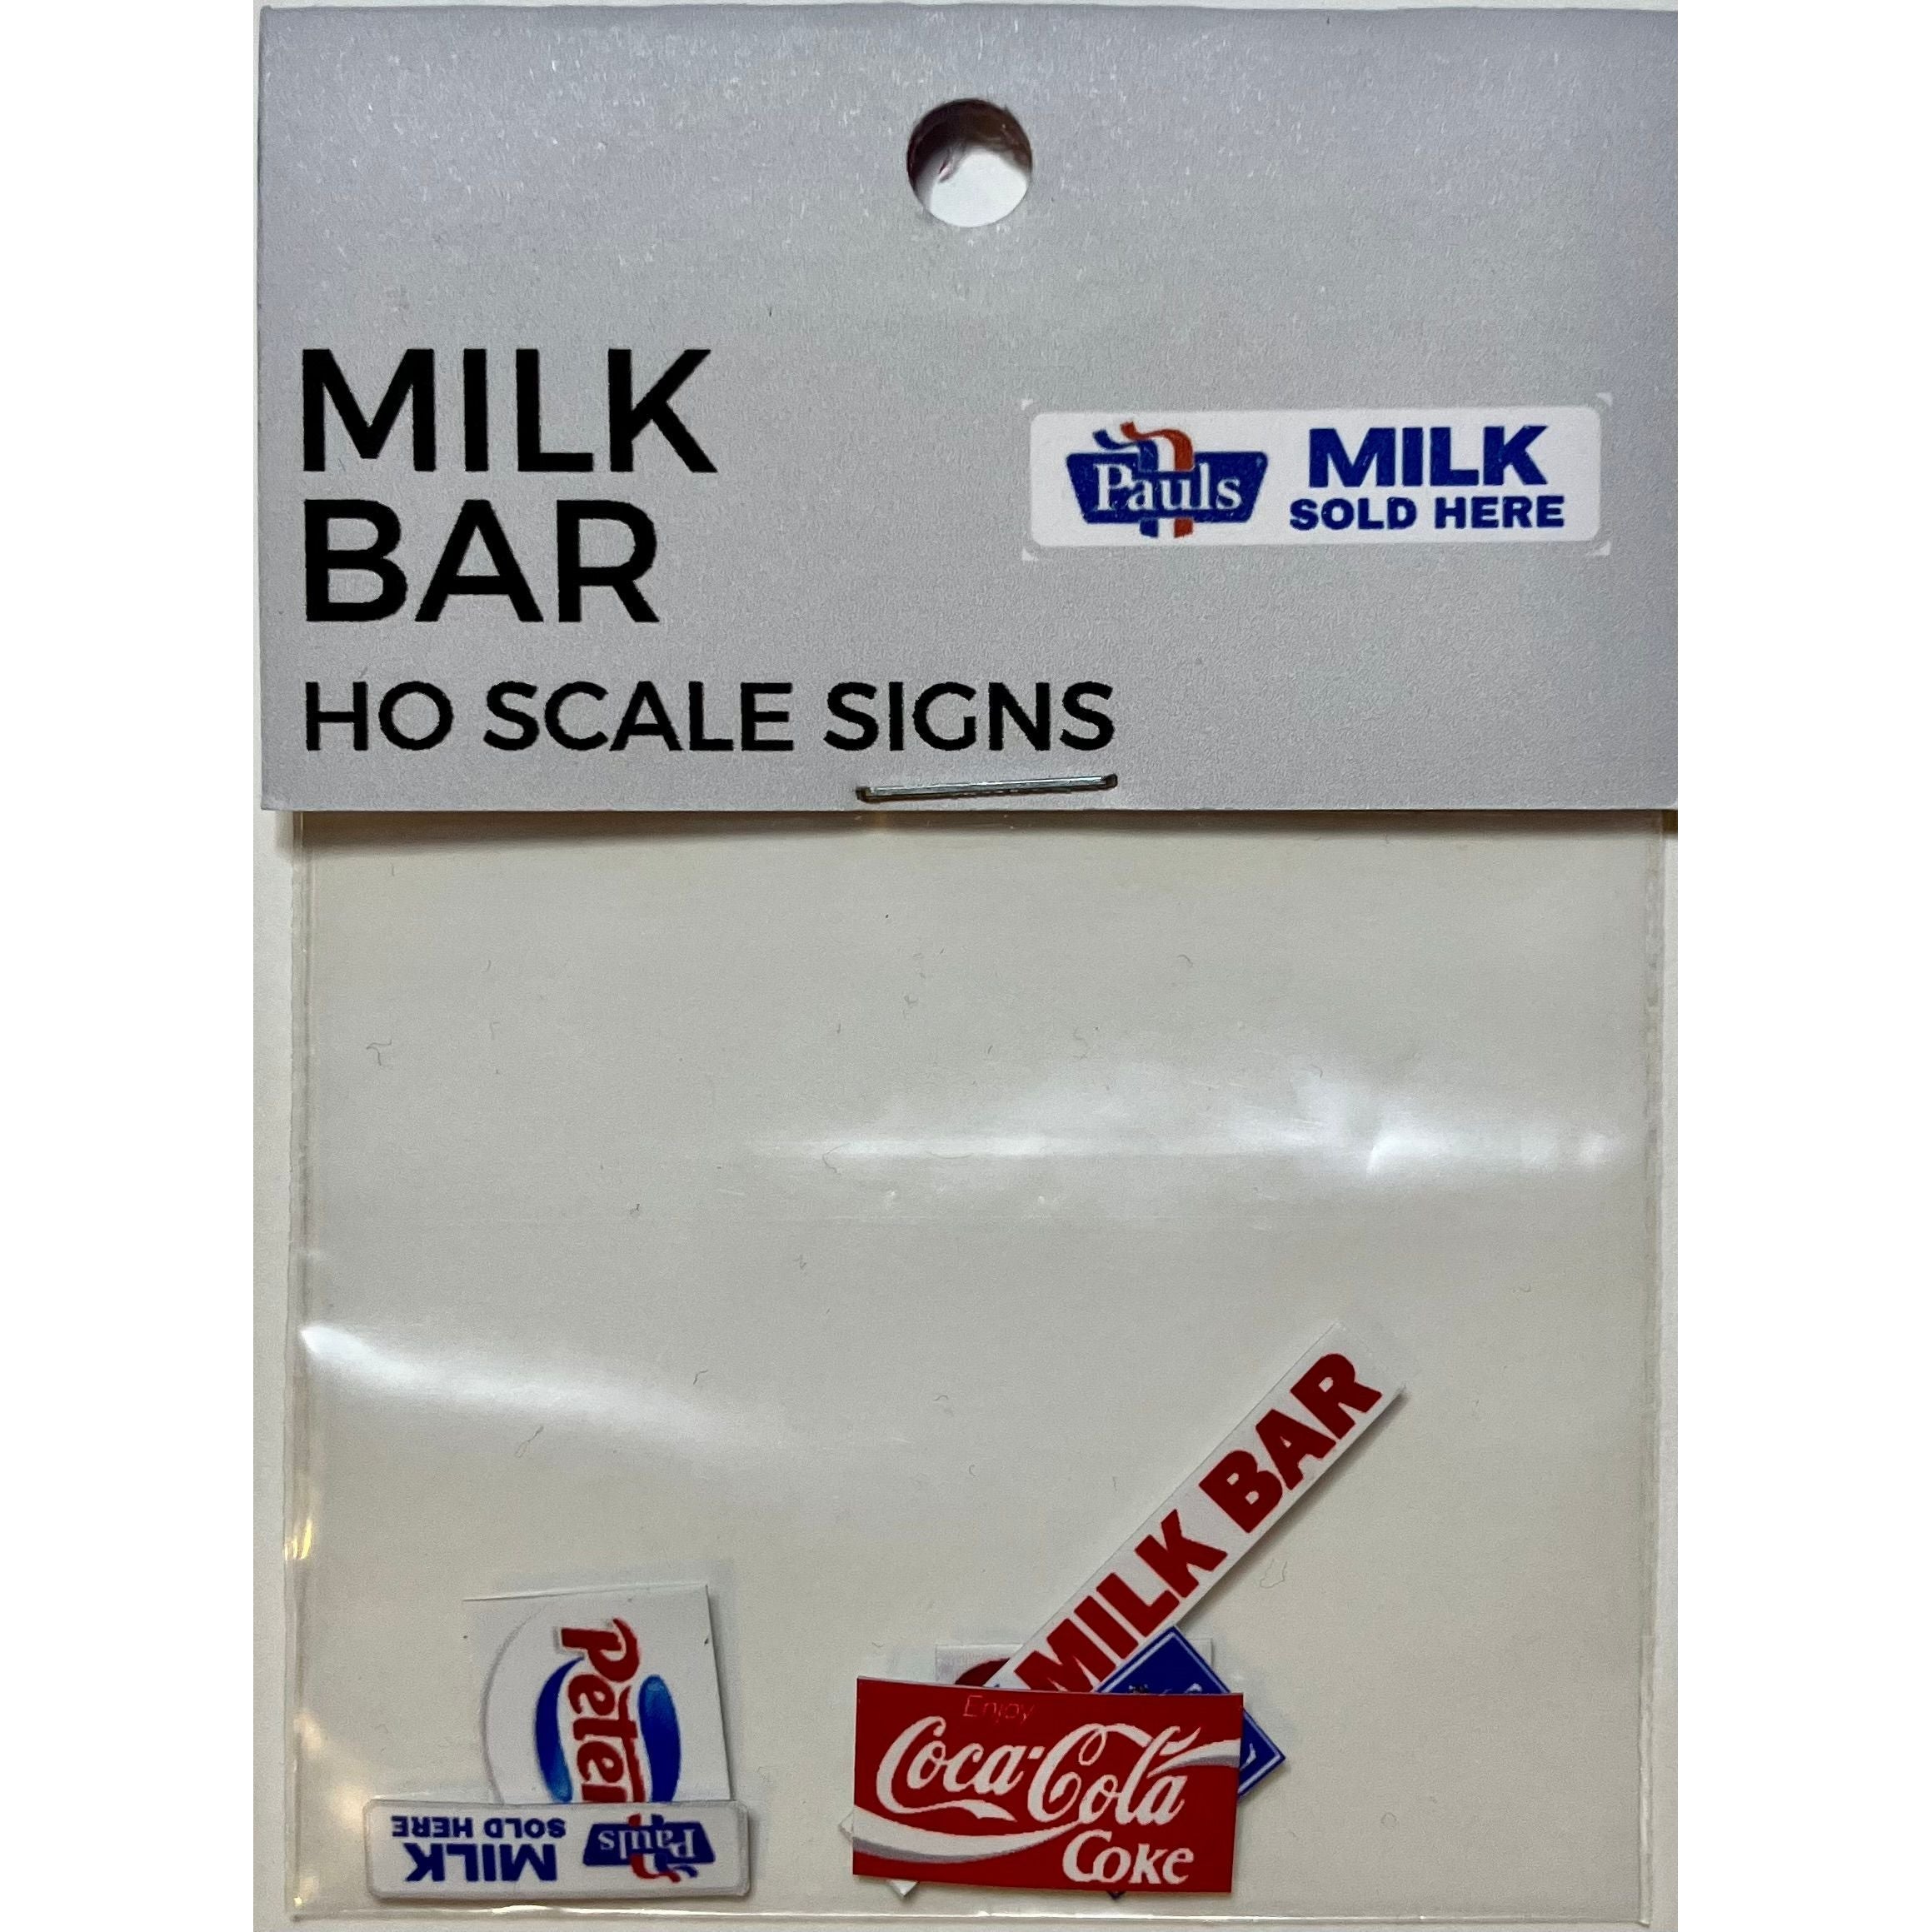 THE TRAIN GIRL Aussie Advertising Milk Bar 6pk - HO Scale